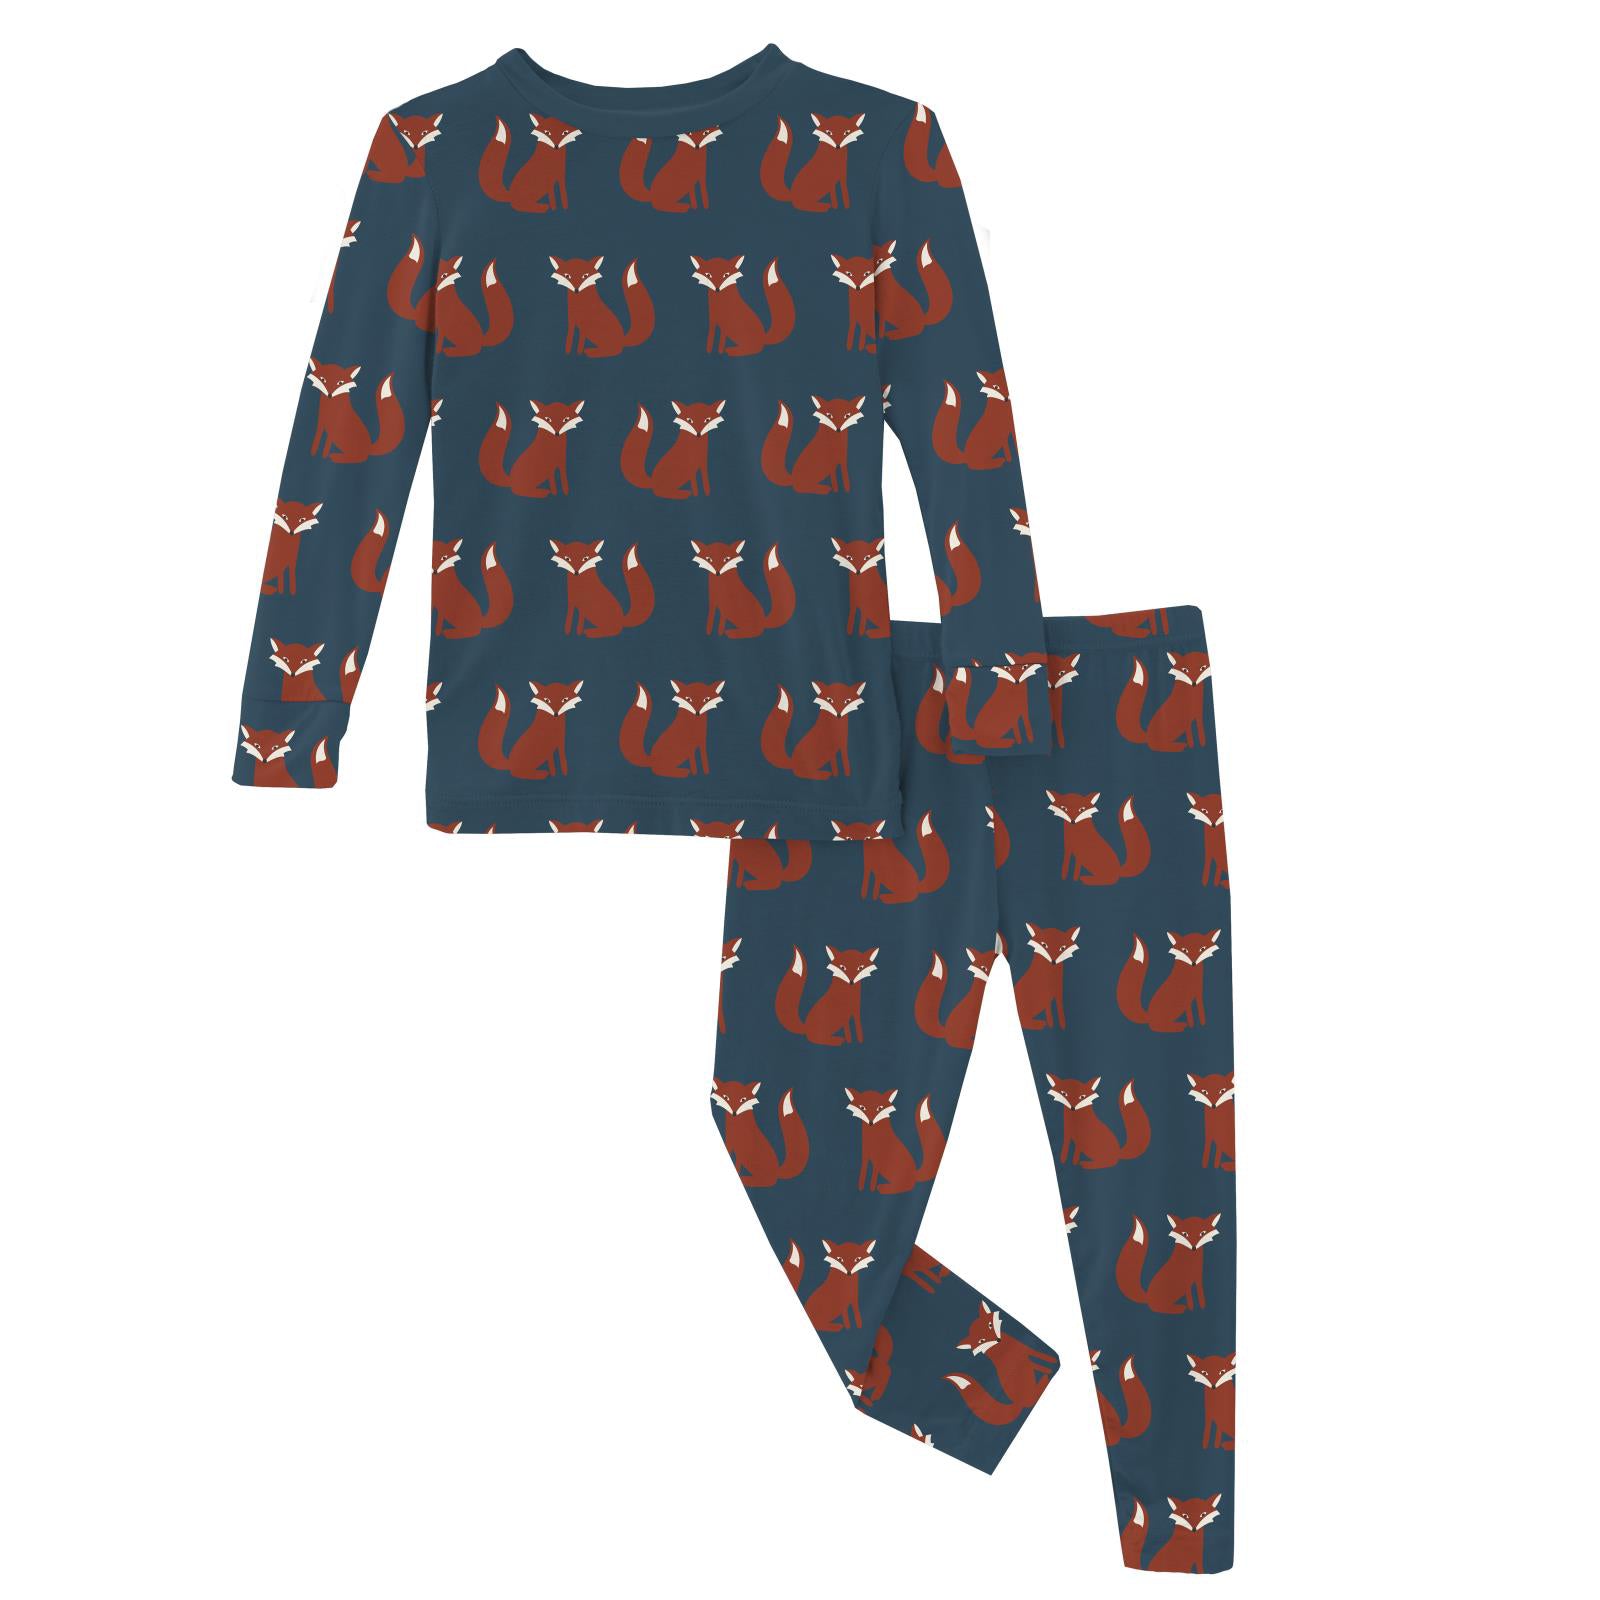 Kickee 15 Year Anniversary - Print Long Sleeve Pajama Set - Peacock Fox